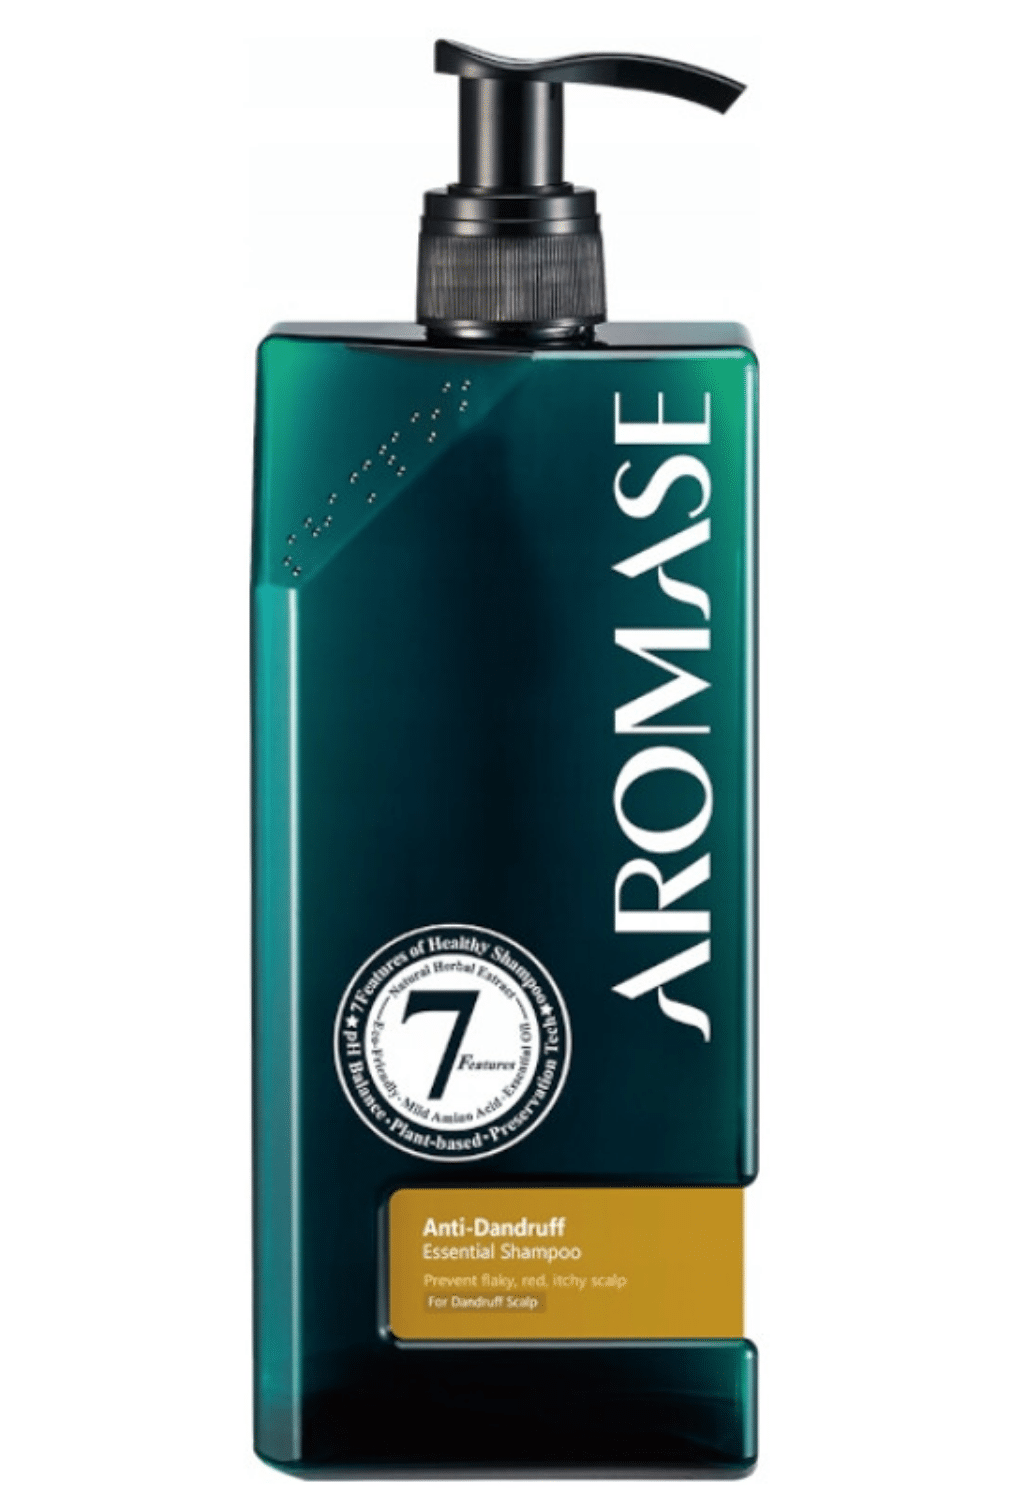 Aromase Shampoo Anti-Dandruff Essential